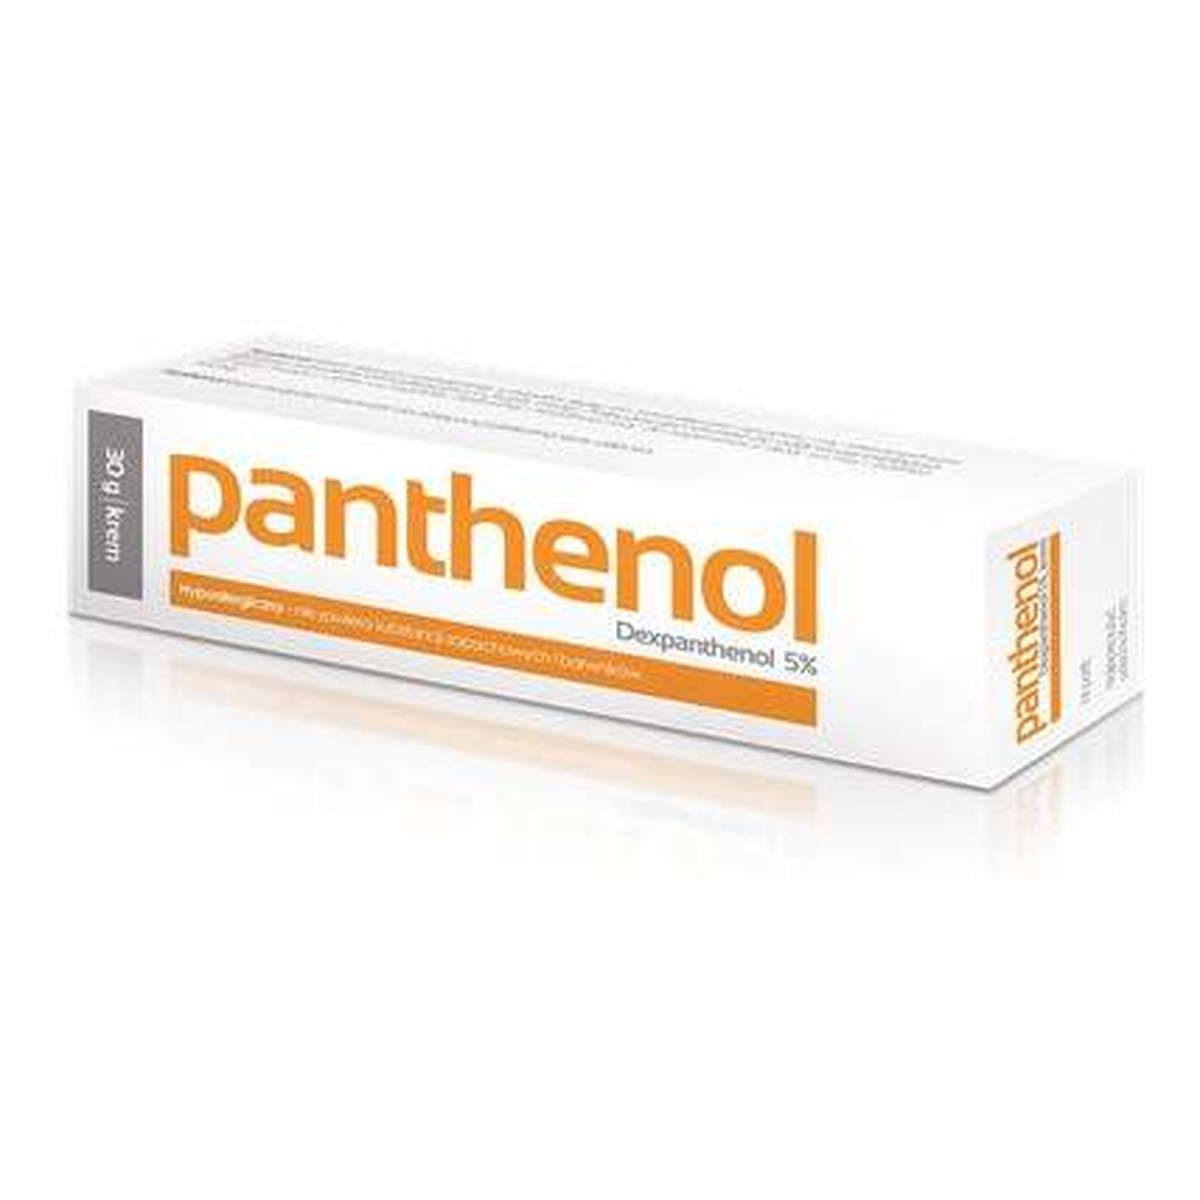 Aflofarm Panthenol 5% łagodzący krem na skórę, 30g